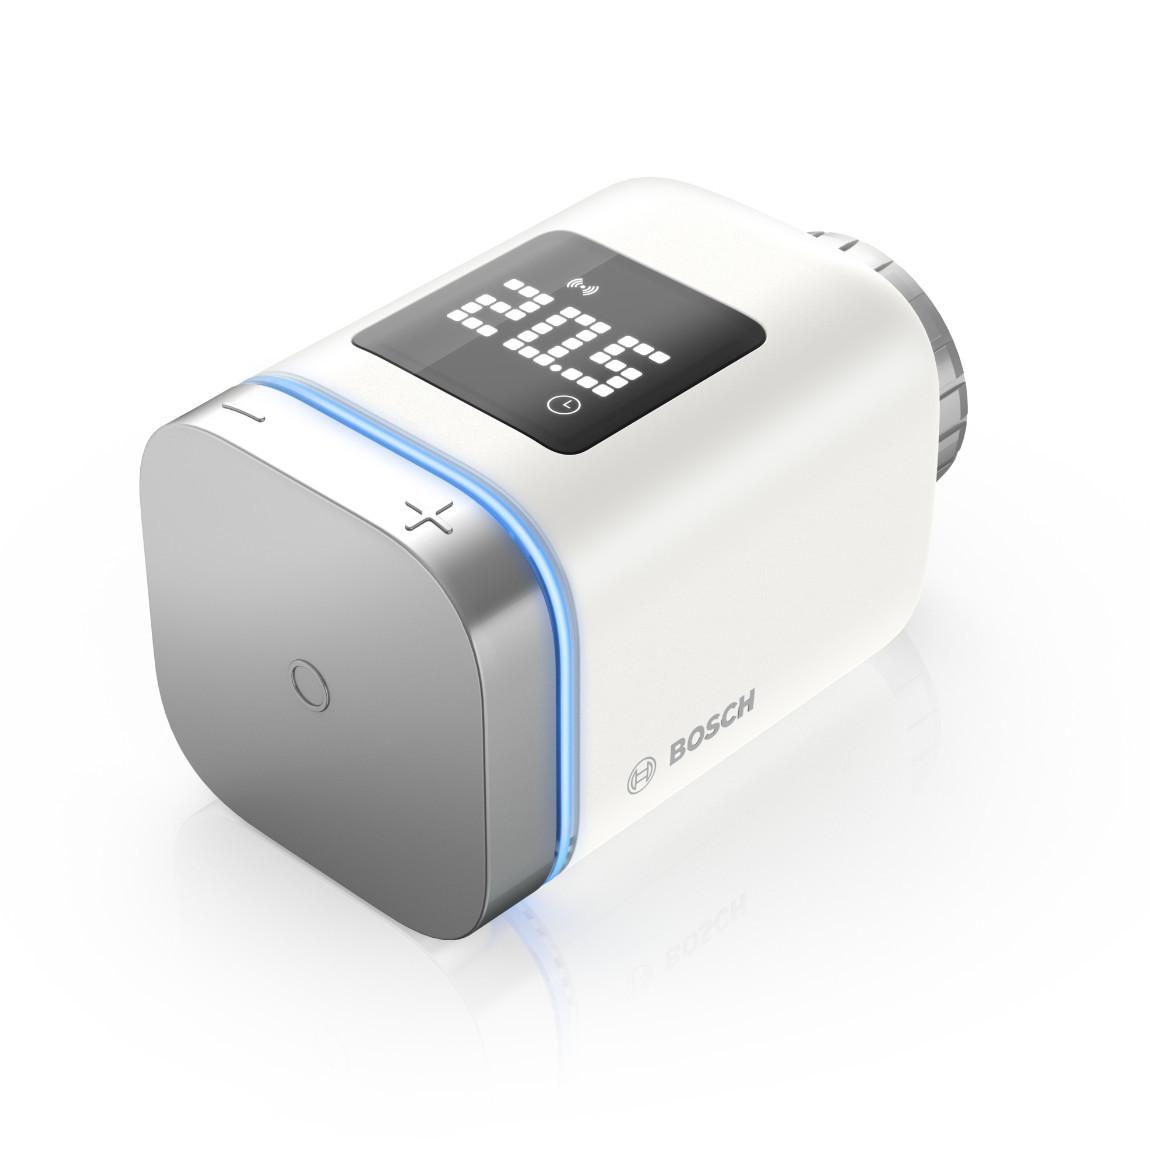 Bosch Smart Home Heizkörper-Thermostat II 6er-Set_schraeg blaue LED